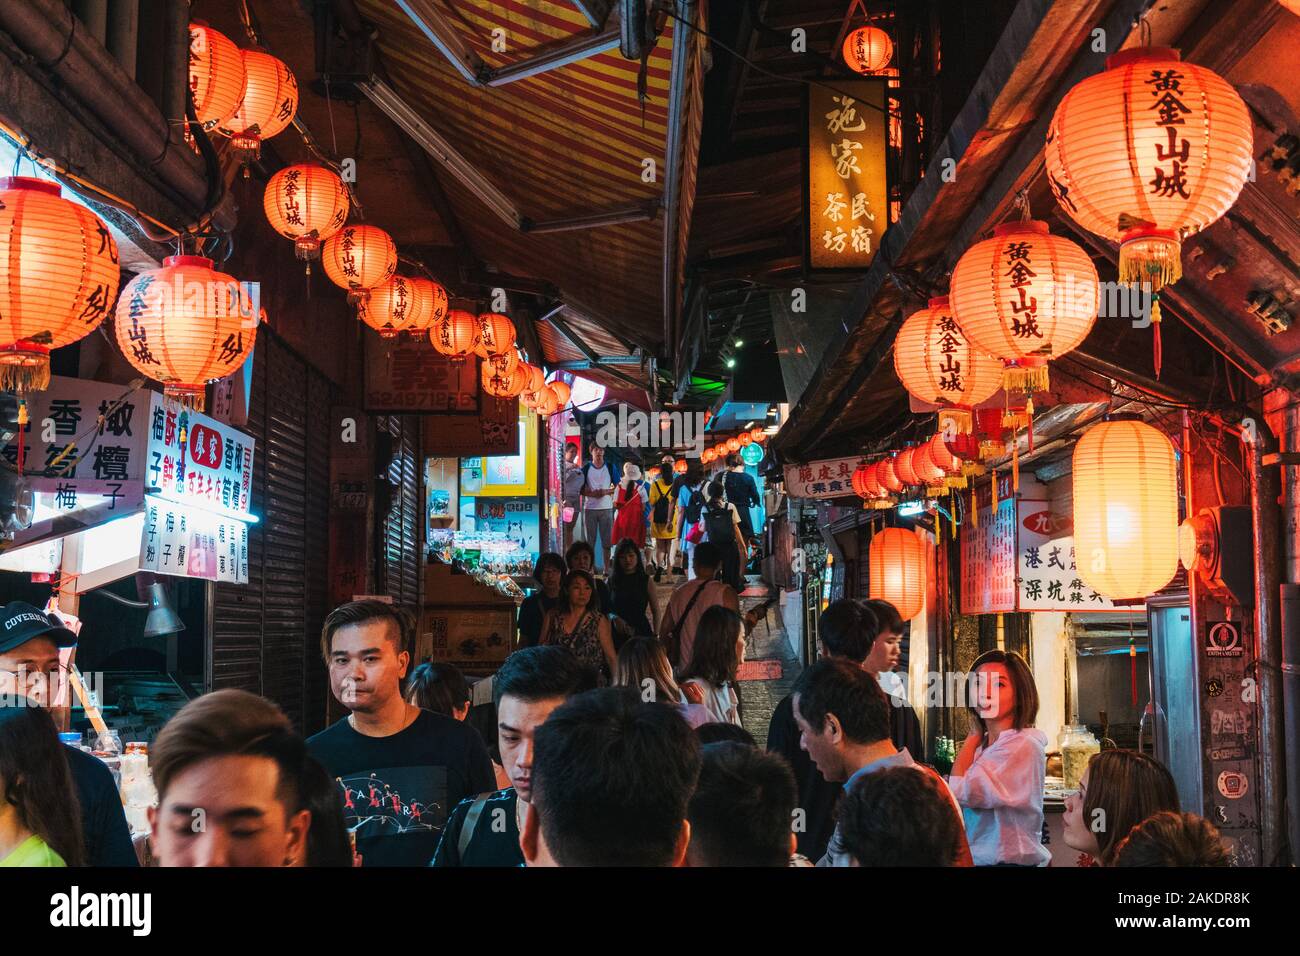 Lanterns hang along the narrow market streets of Jiufen Old Street, a popular tourist destination near Taipei, Taiwan Stock Photo